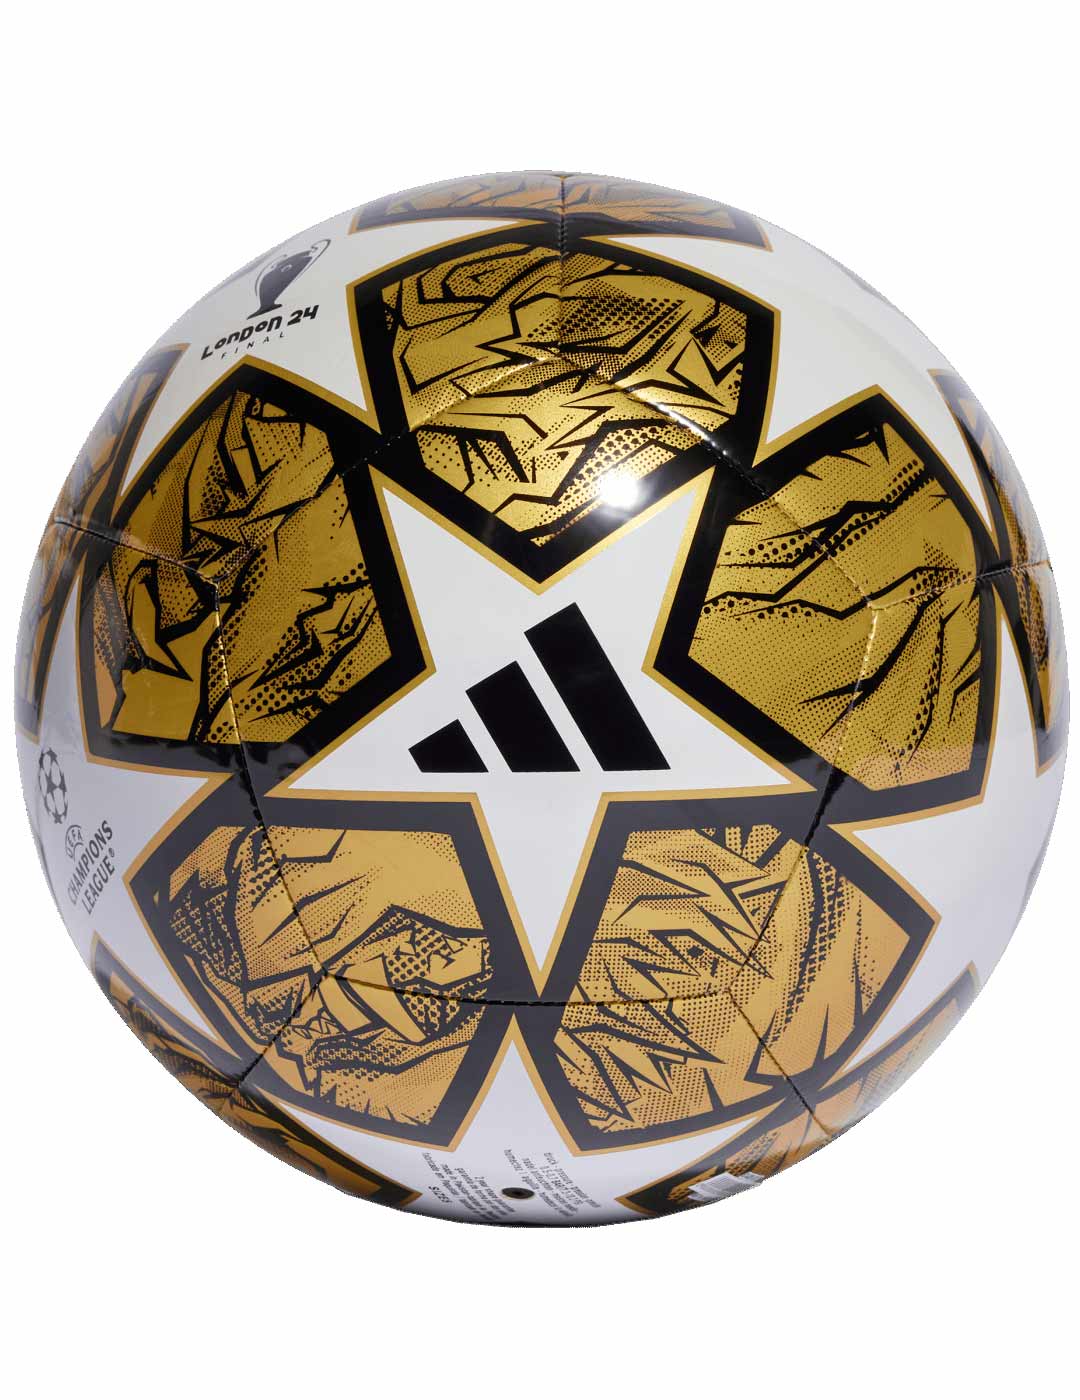 balón de fútbol champions adidas TRN FOIL, blanco/oro